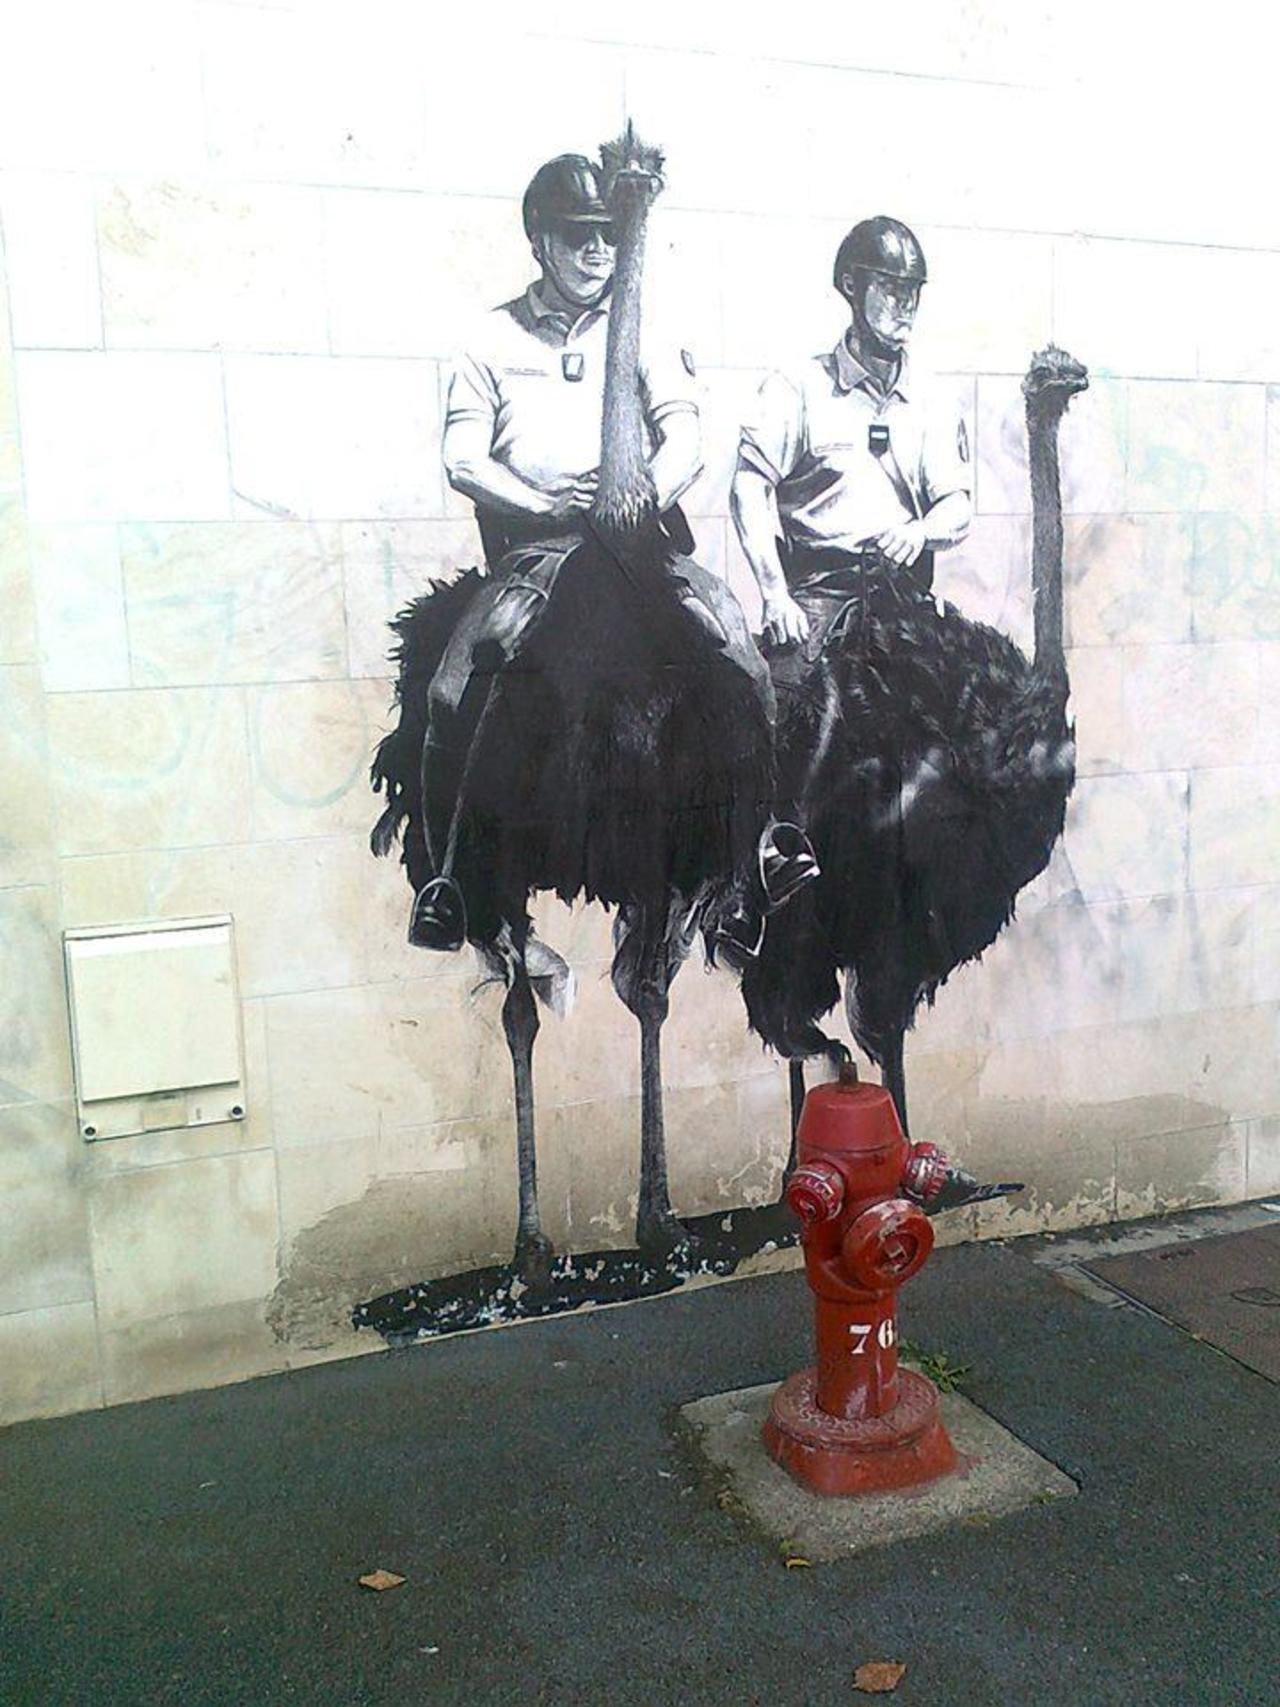 CALL 911 #streetart #paint #art #photo #urban #graffiti #world #banksy http://t.co/3X0JjlL2uy